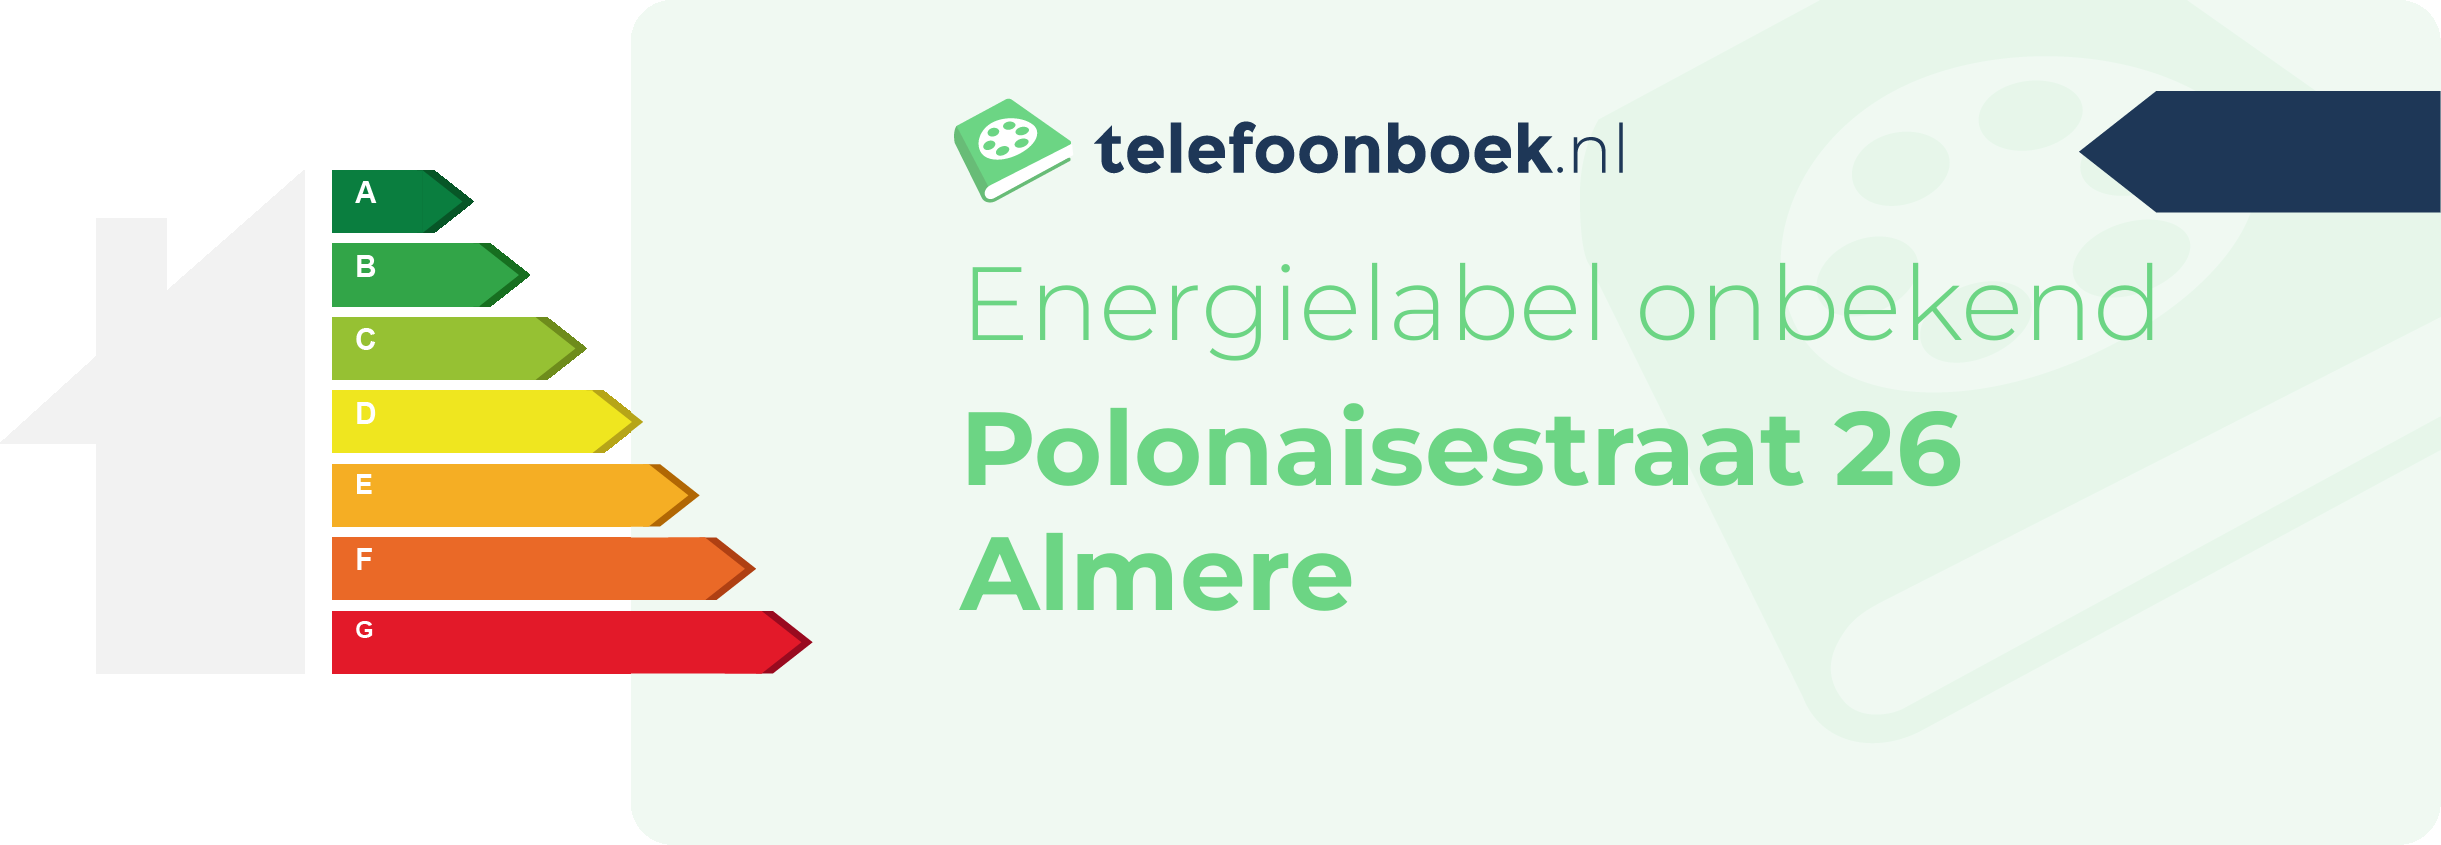 Energielabel Polonaisestraat 26 Almere